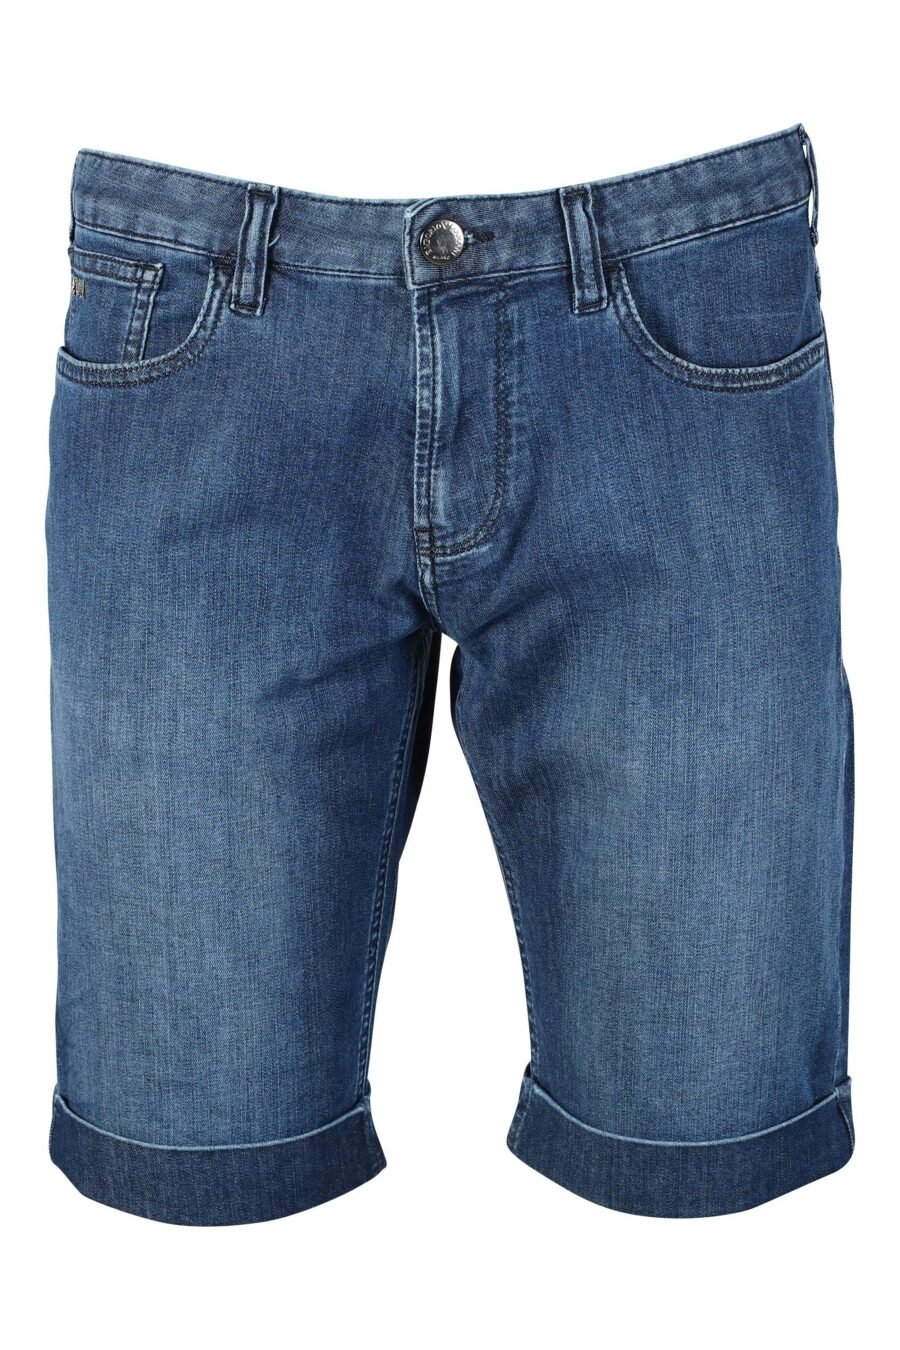 Blue denim shorts with metal mini logo - IMG 9493